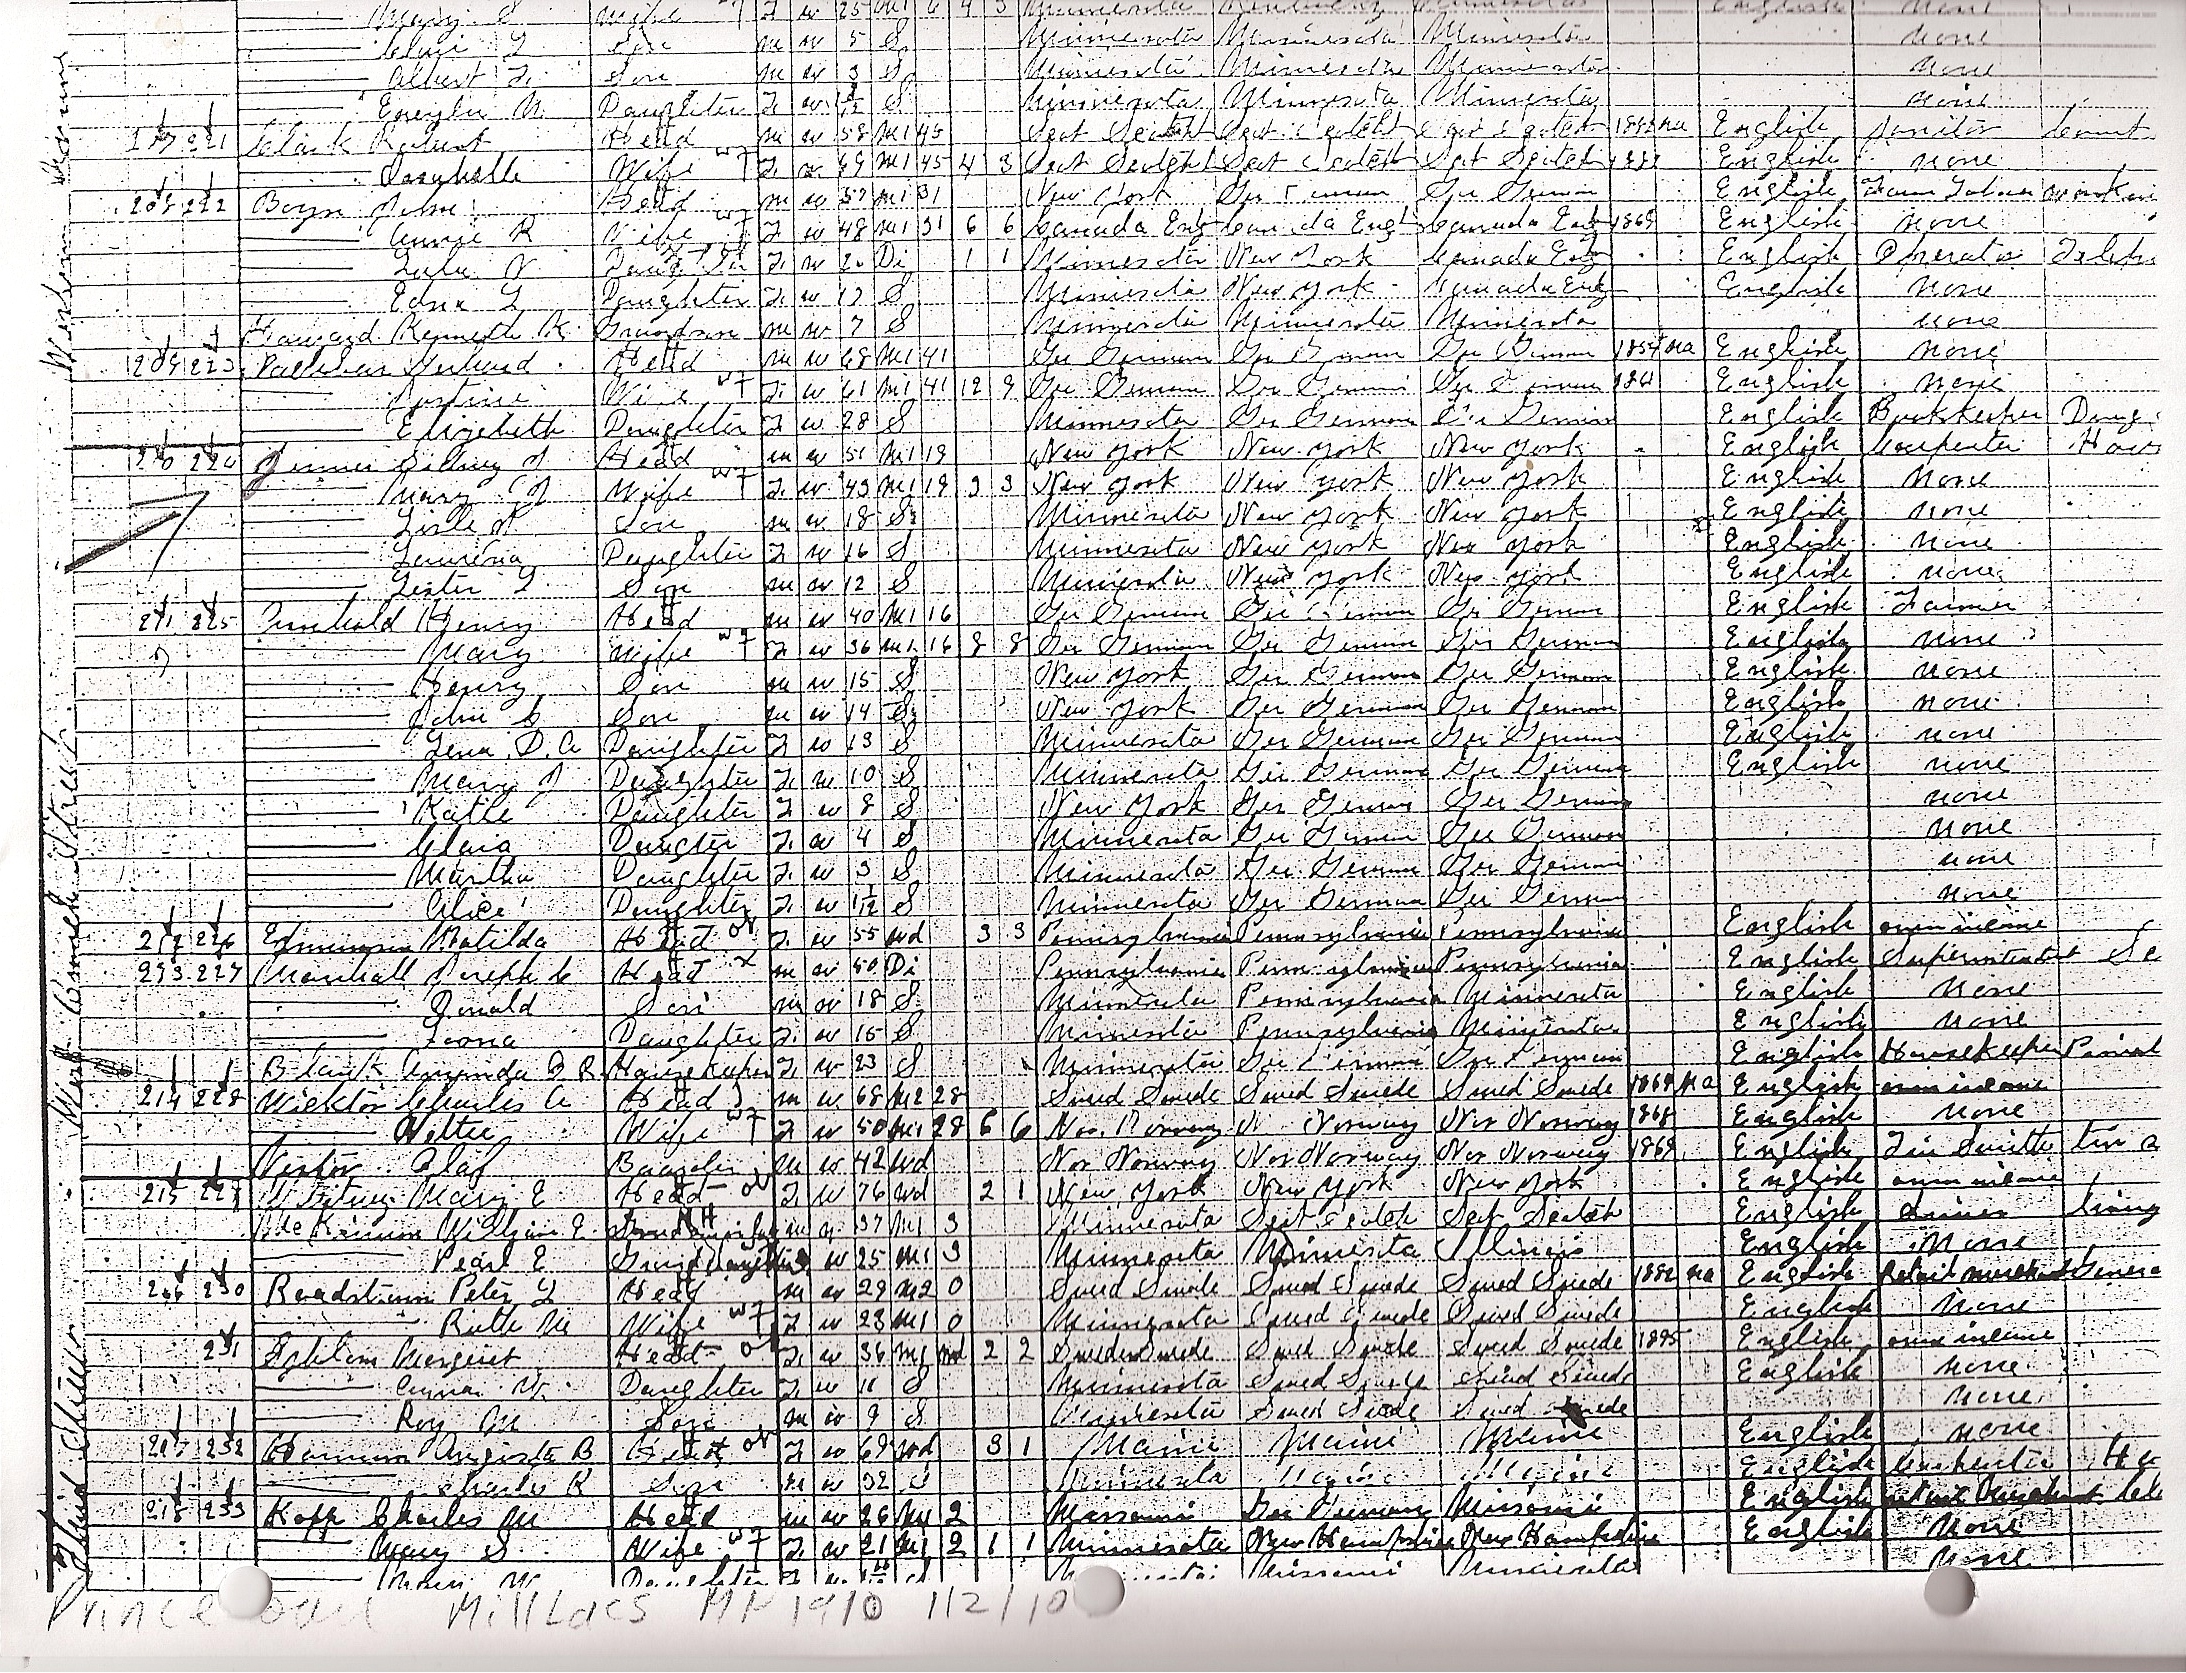 sidney Jesmer 1910 census full page